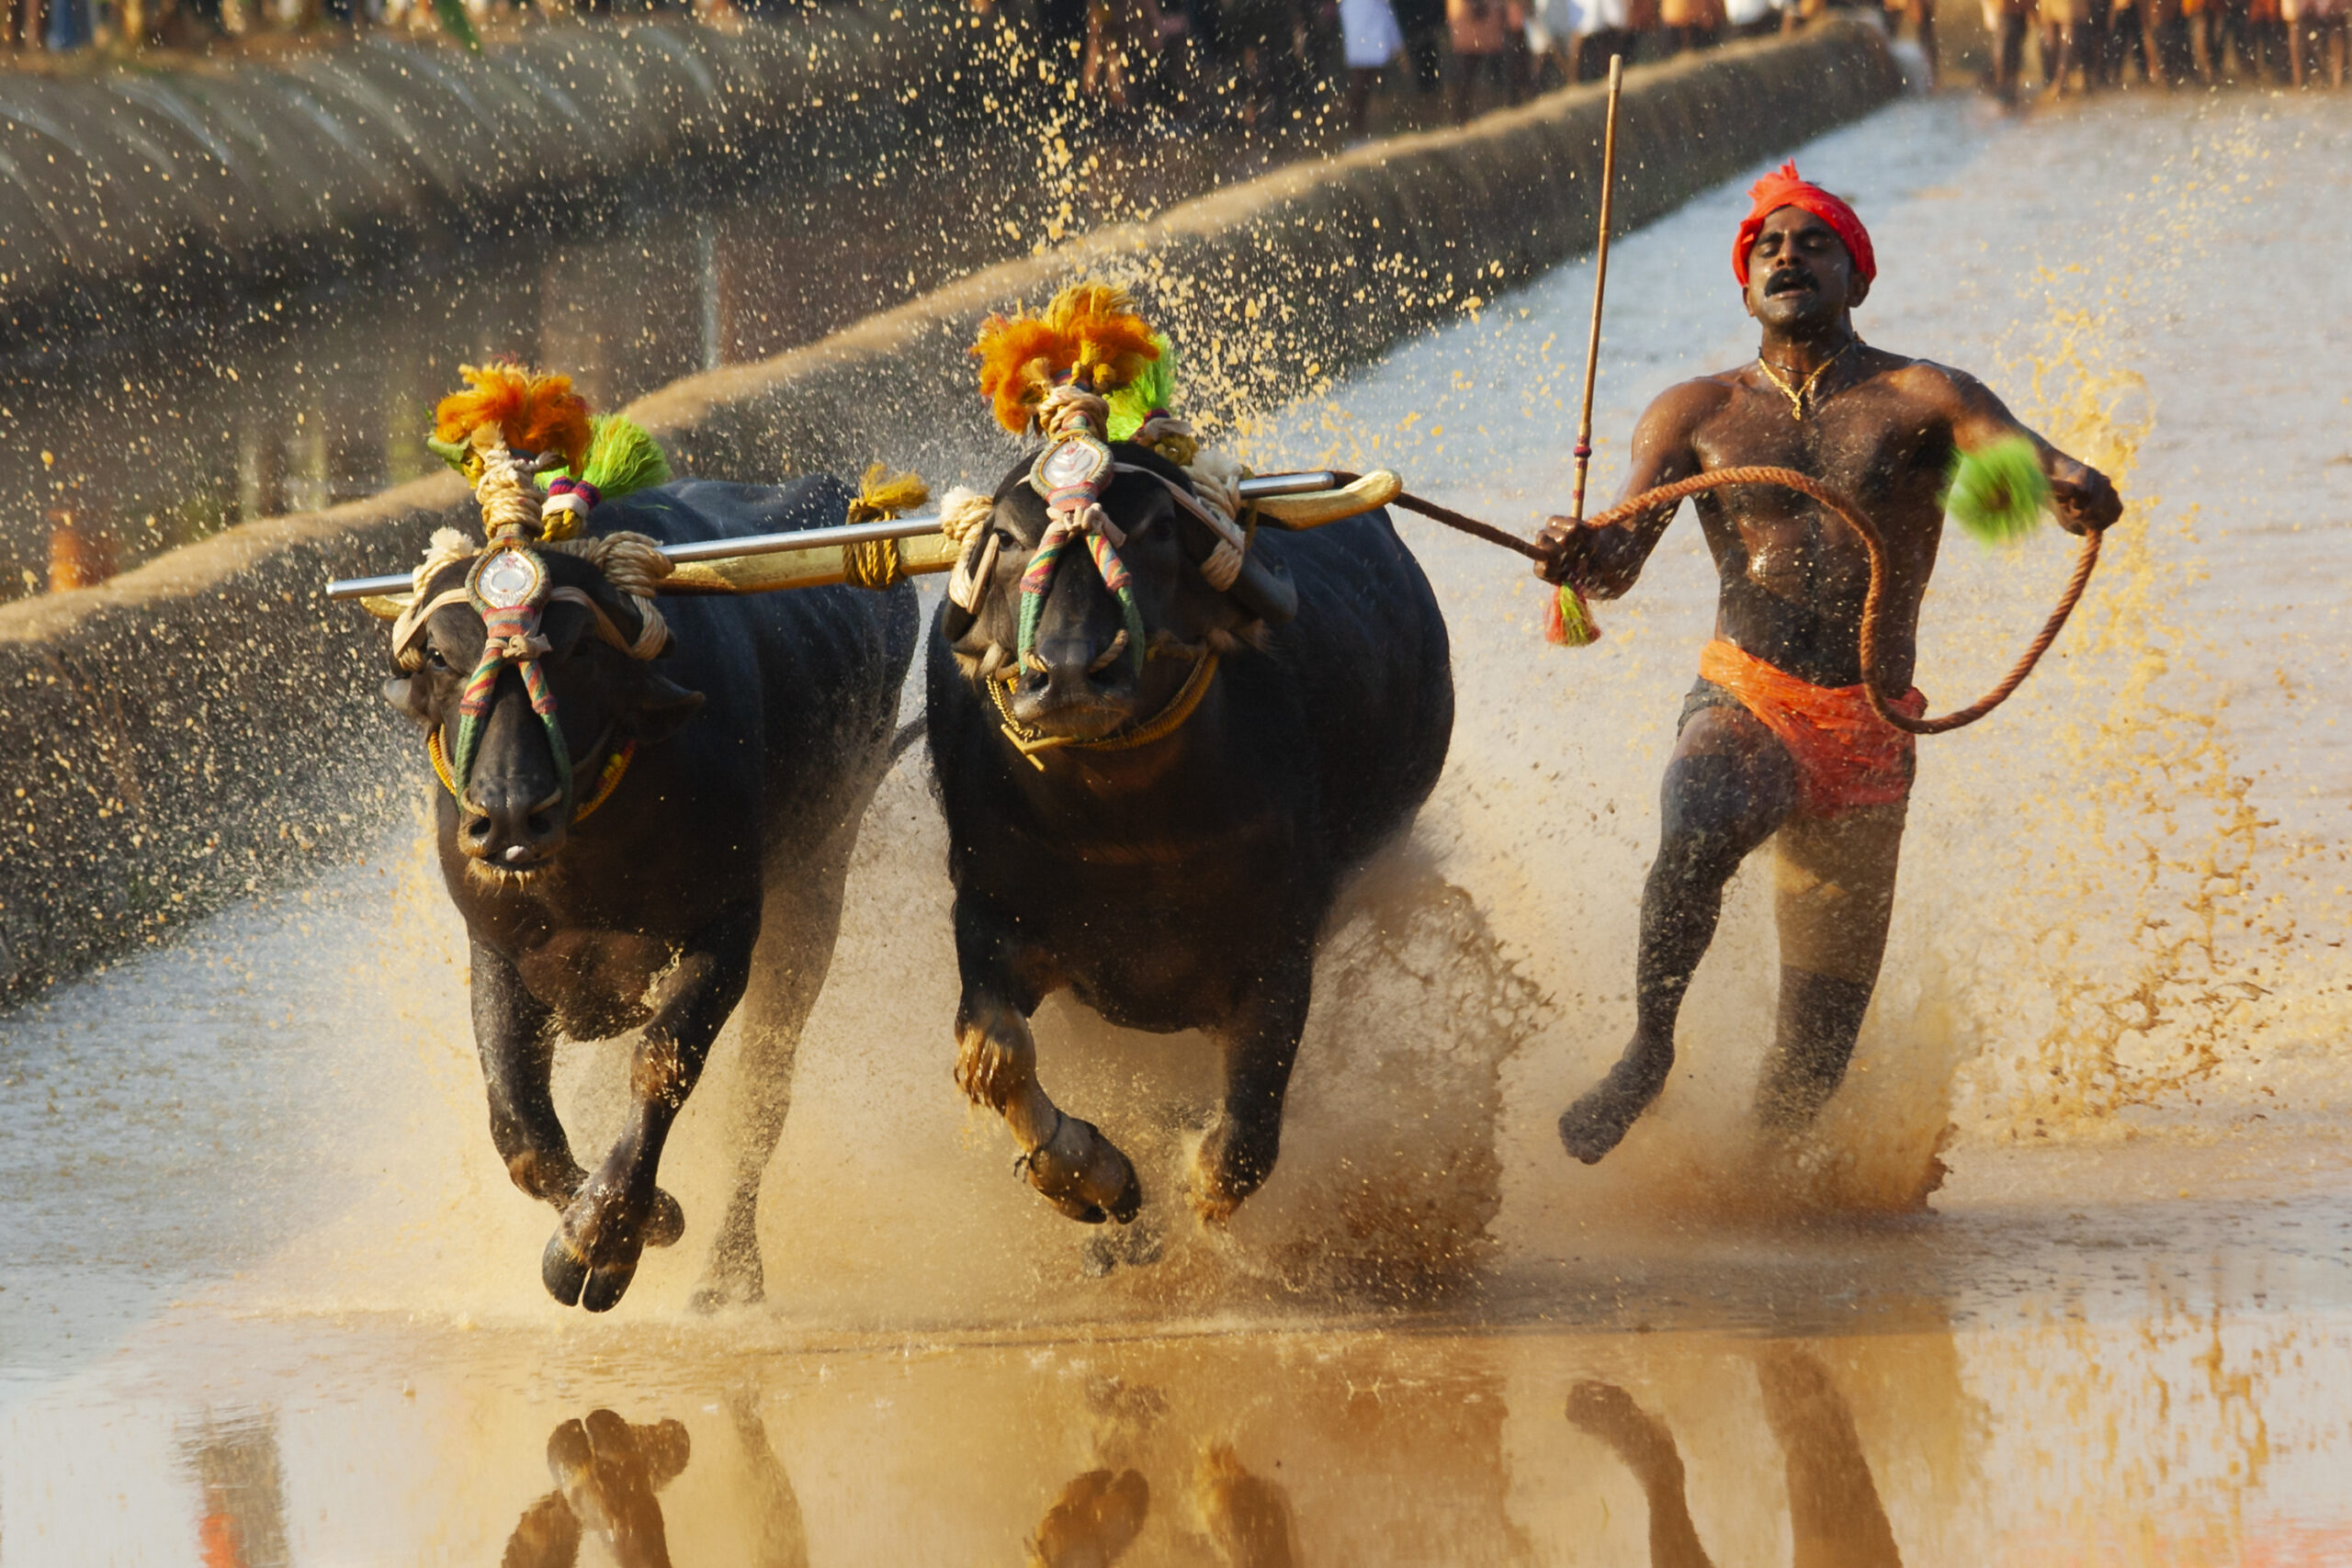  Karnataka: Traditional buffalo Race Kambala Held At Moodabidri In Dakshina Kannada District